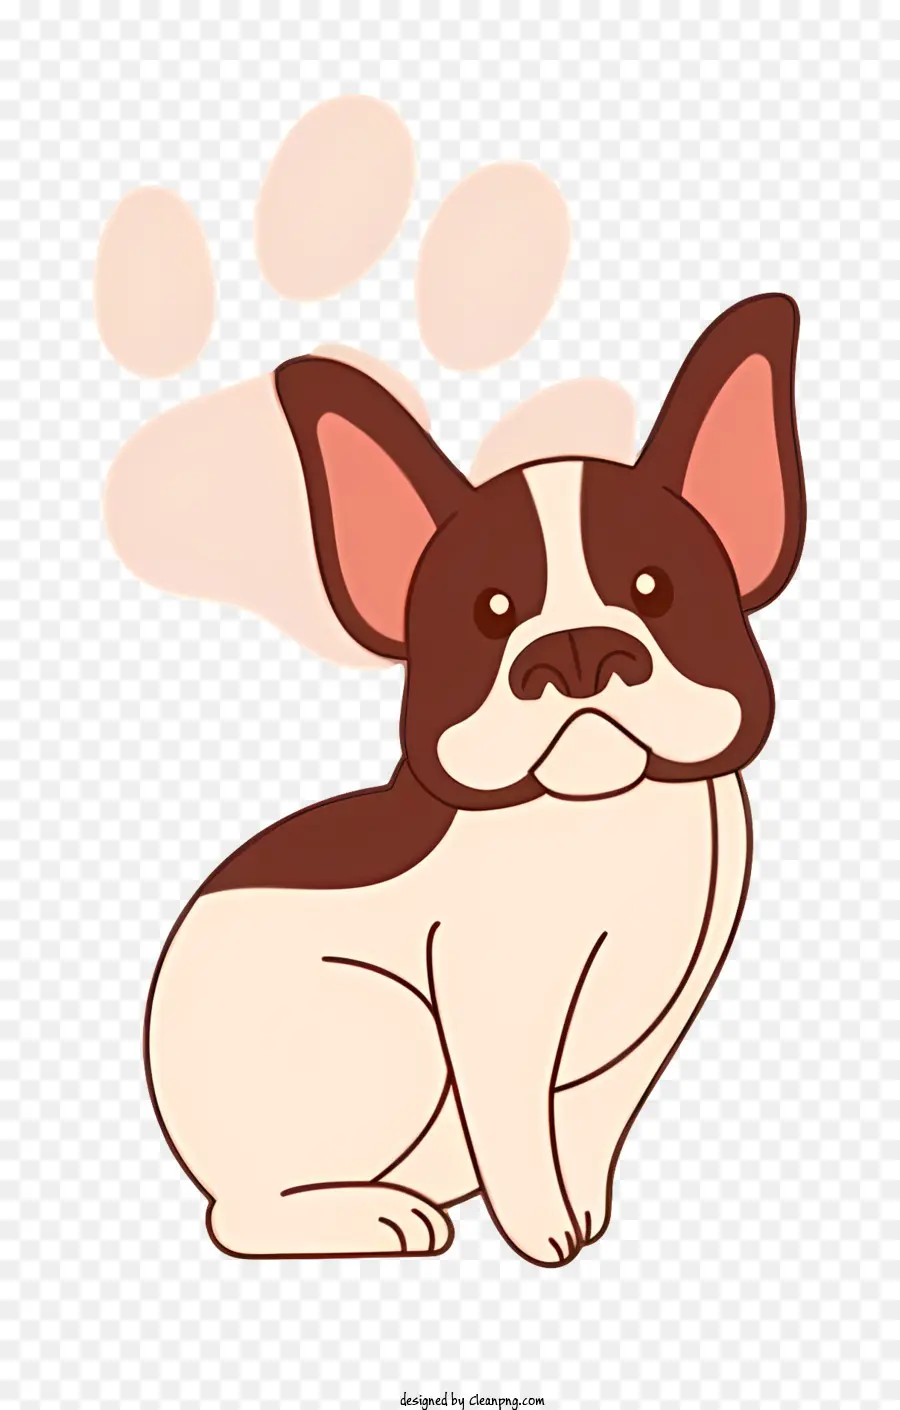 bulldog francese - Bulldog francese marrone e bianco con zampe visibili